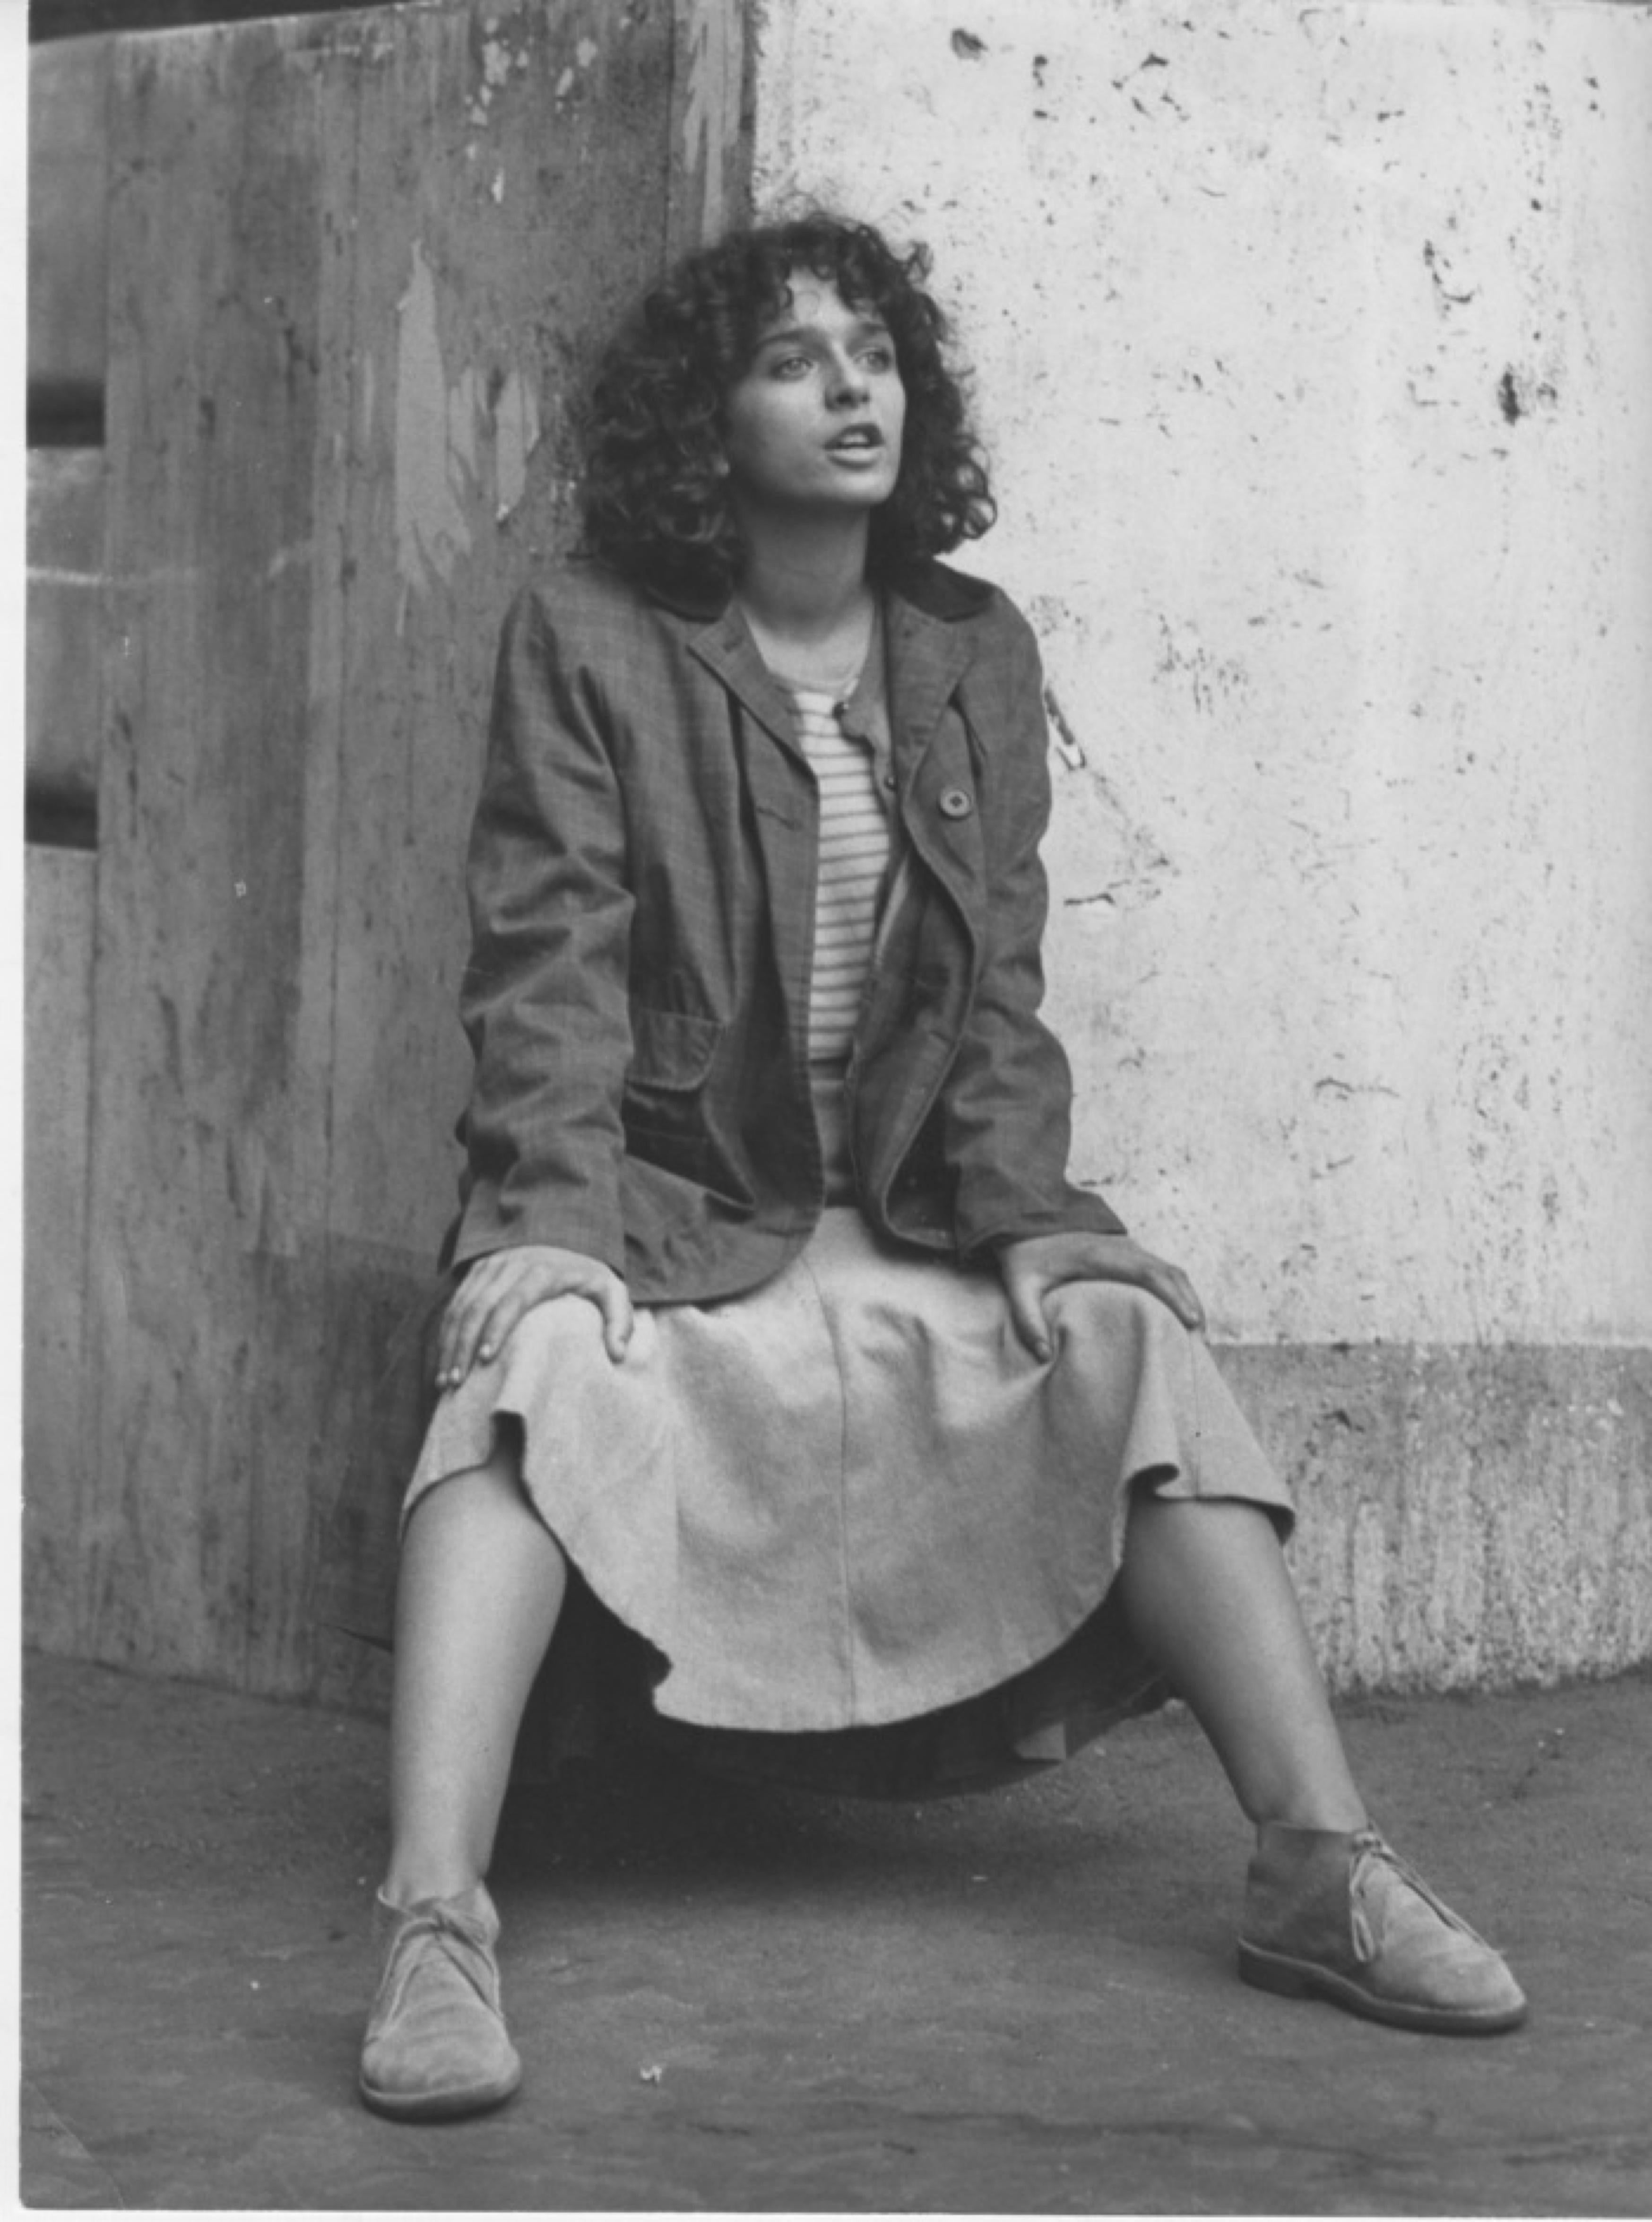 Unknown Portrait Photograph - The Italian Actress Valeria Golino  - Vintage Photo - 1980s